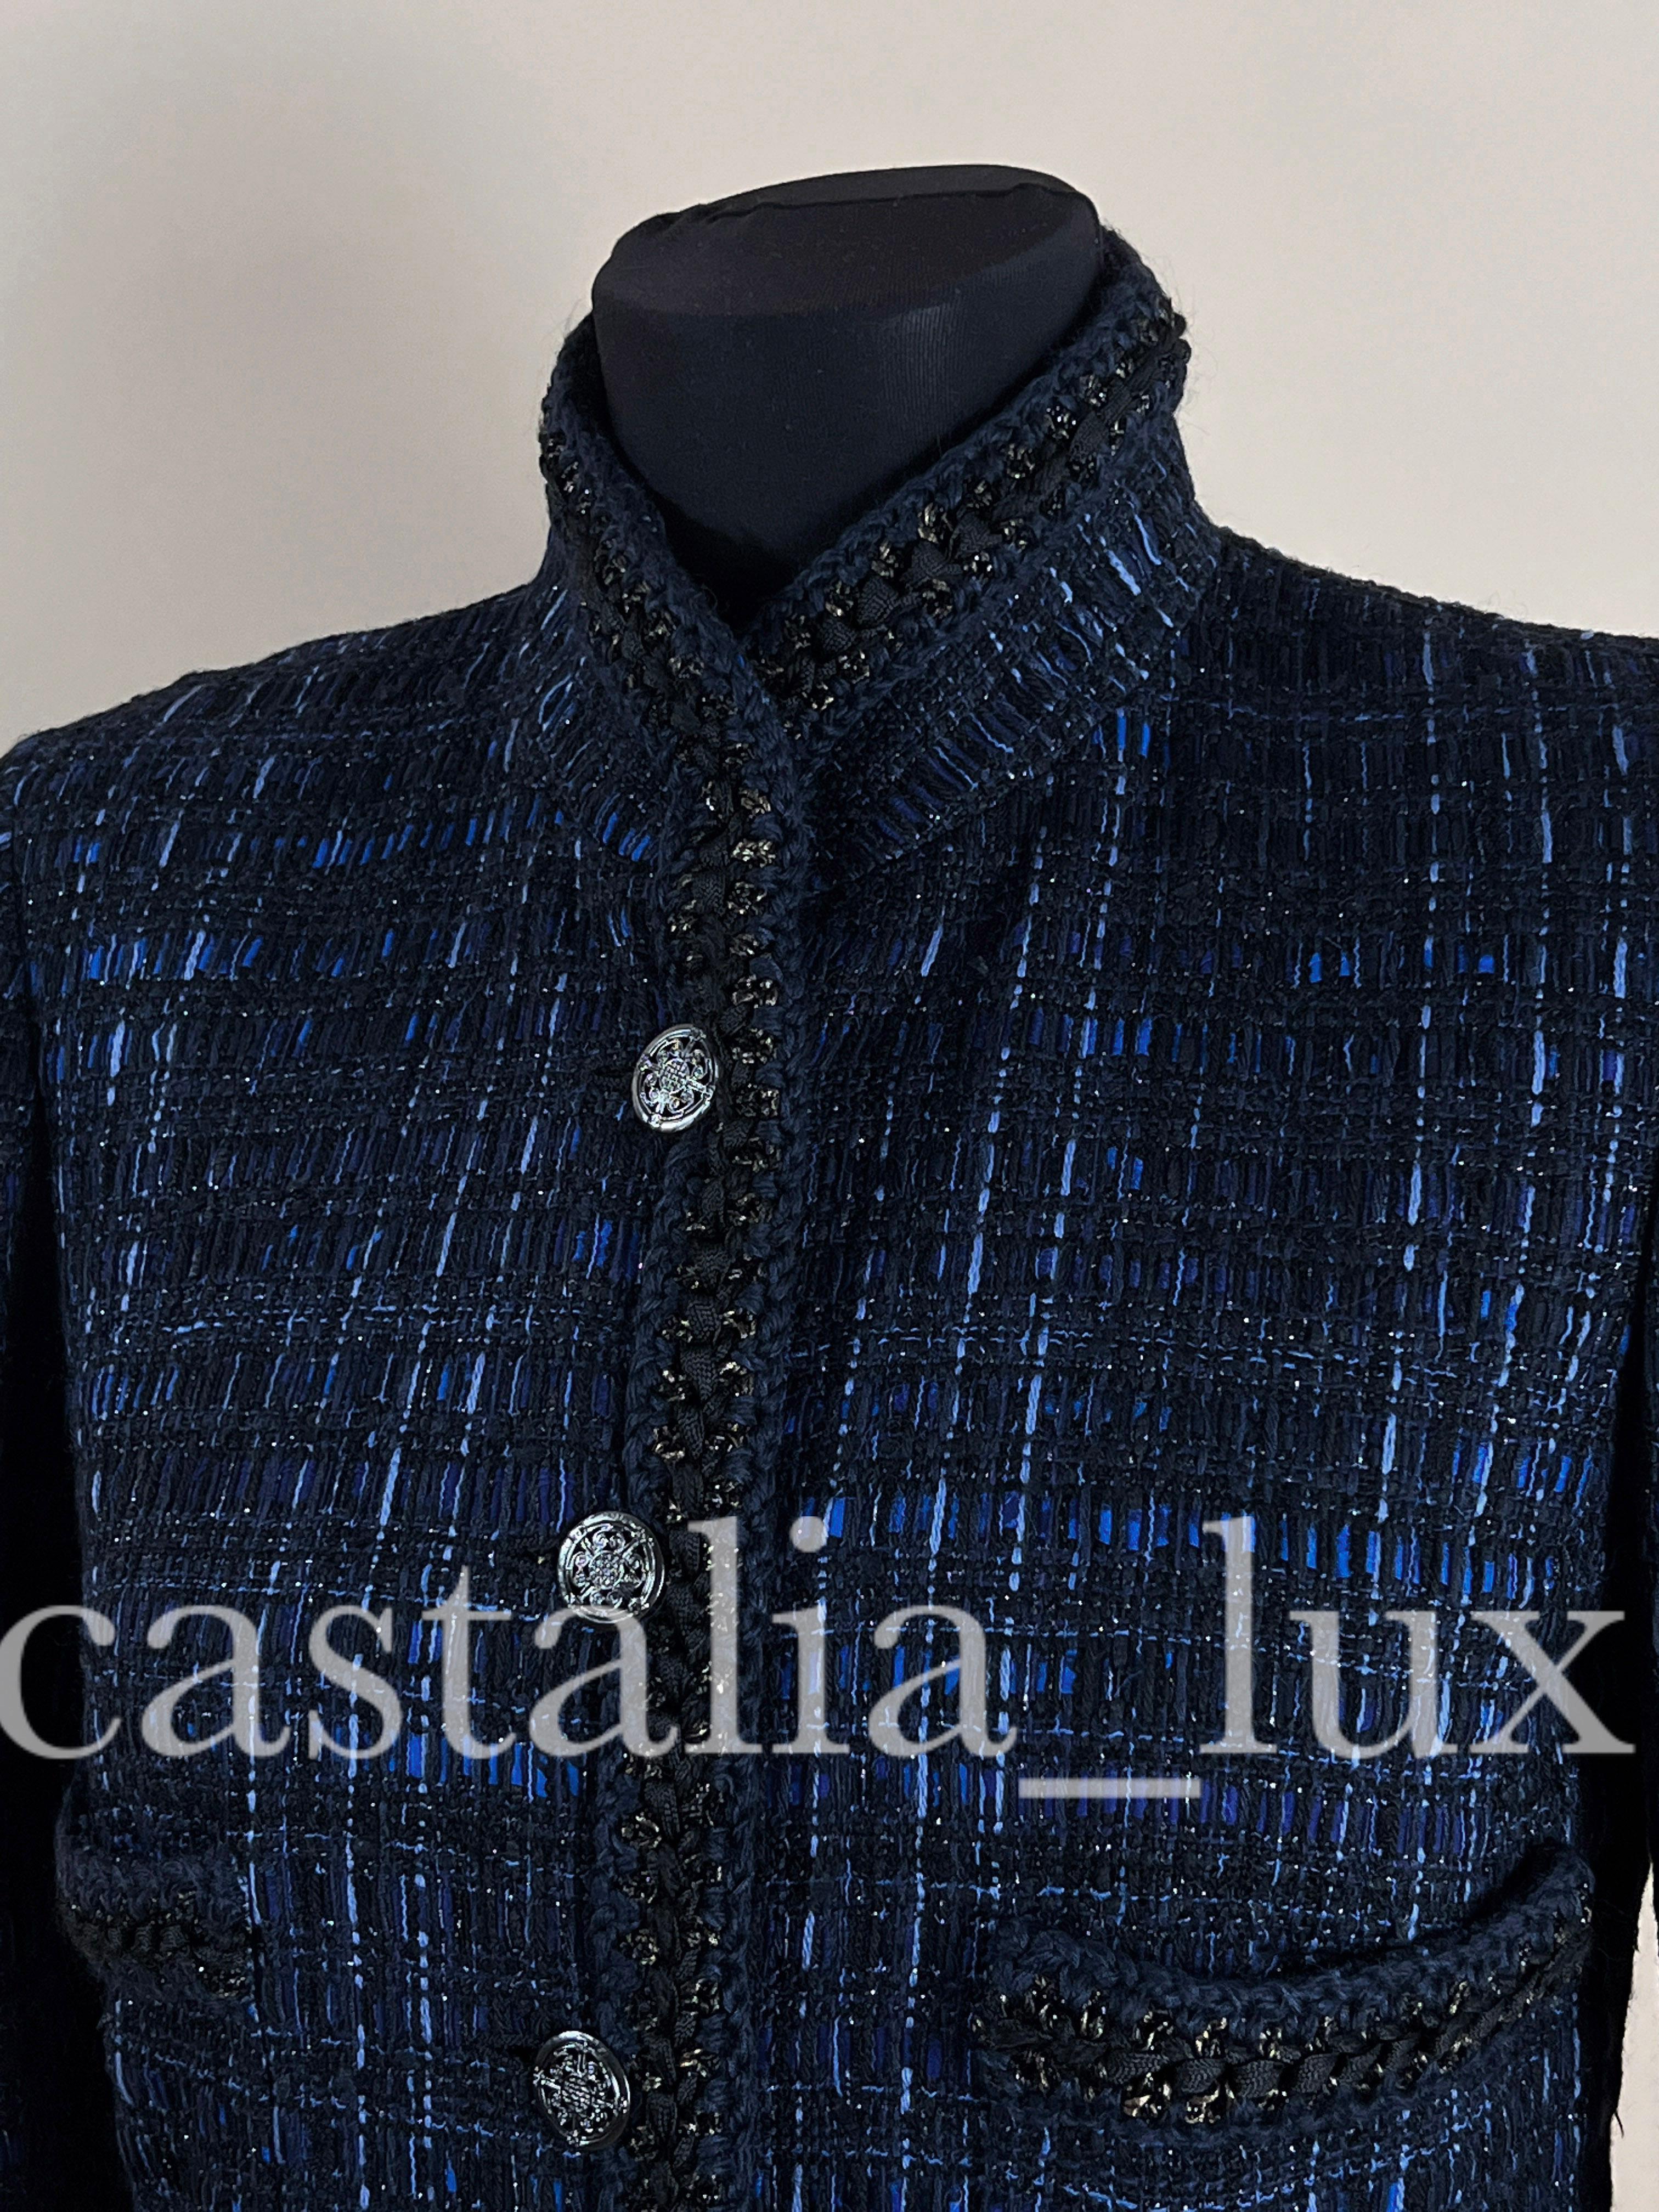 Chanel Paris / Shanghai Ribbon Tweed Jacket 5